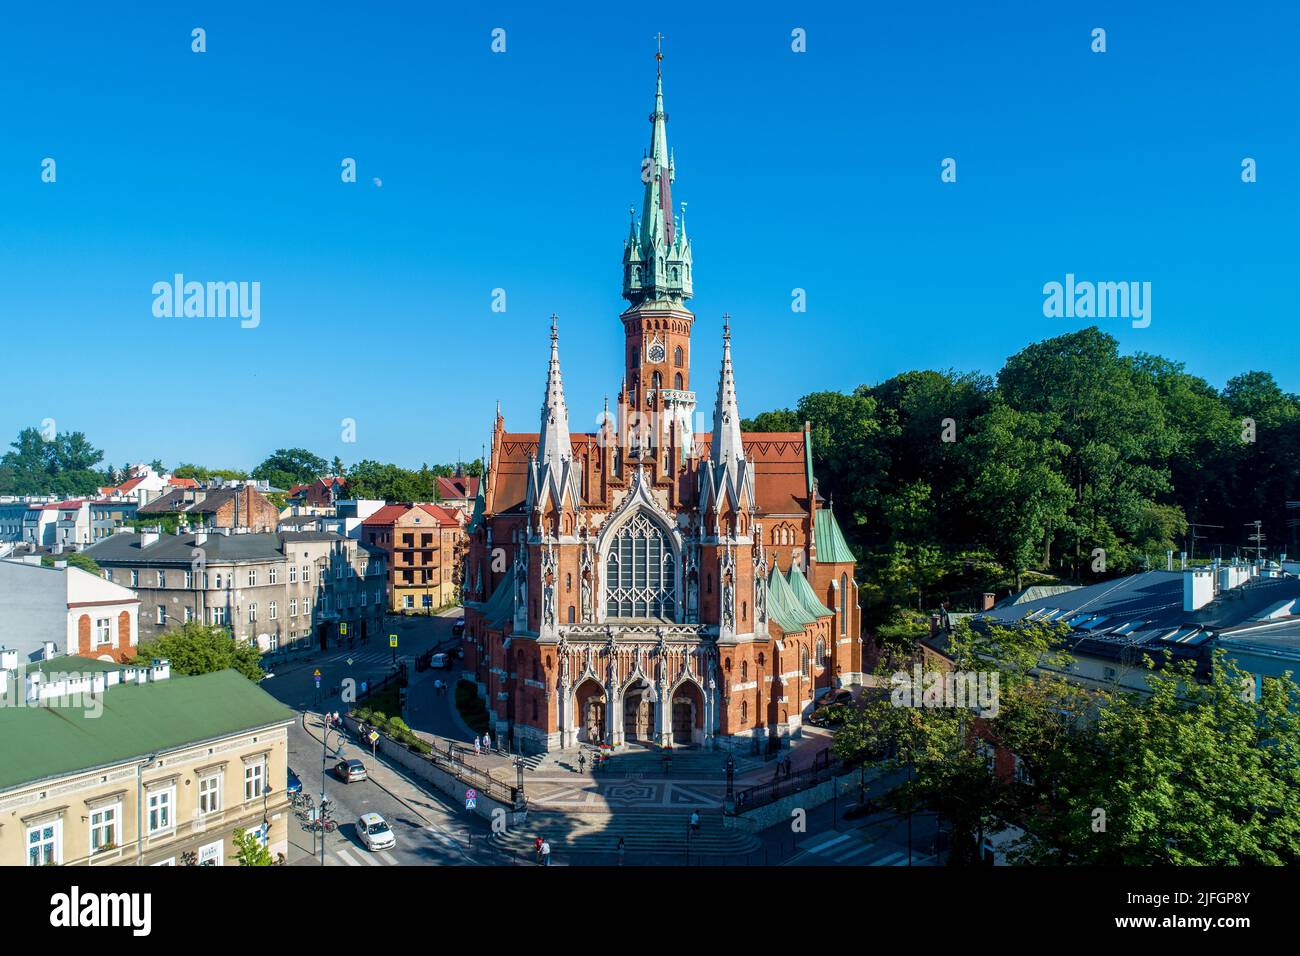 Krakow, Poland. Church Saint Joseph - a historic Roman Catholic church in Gothic Revival (neo-Gothic) style at the Podgorski Square in Podgorze distri Stock Photo